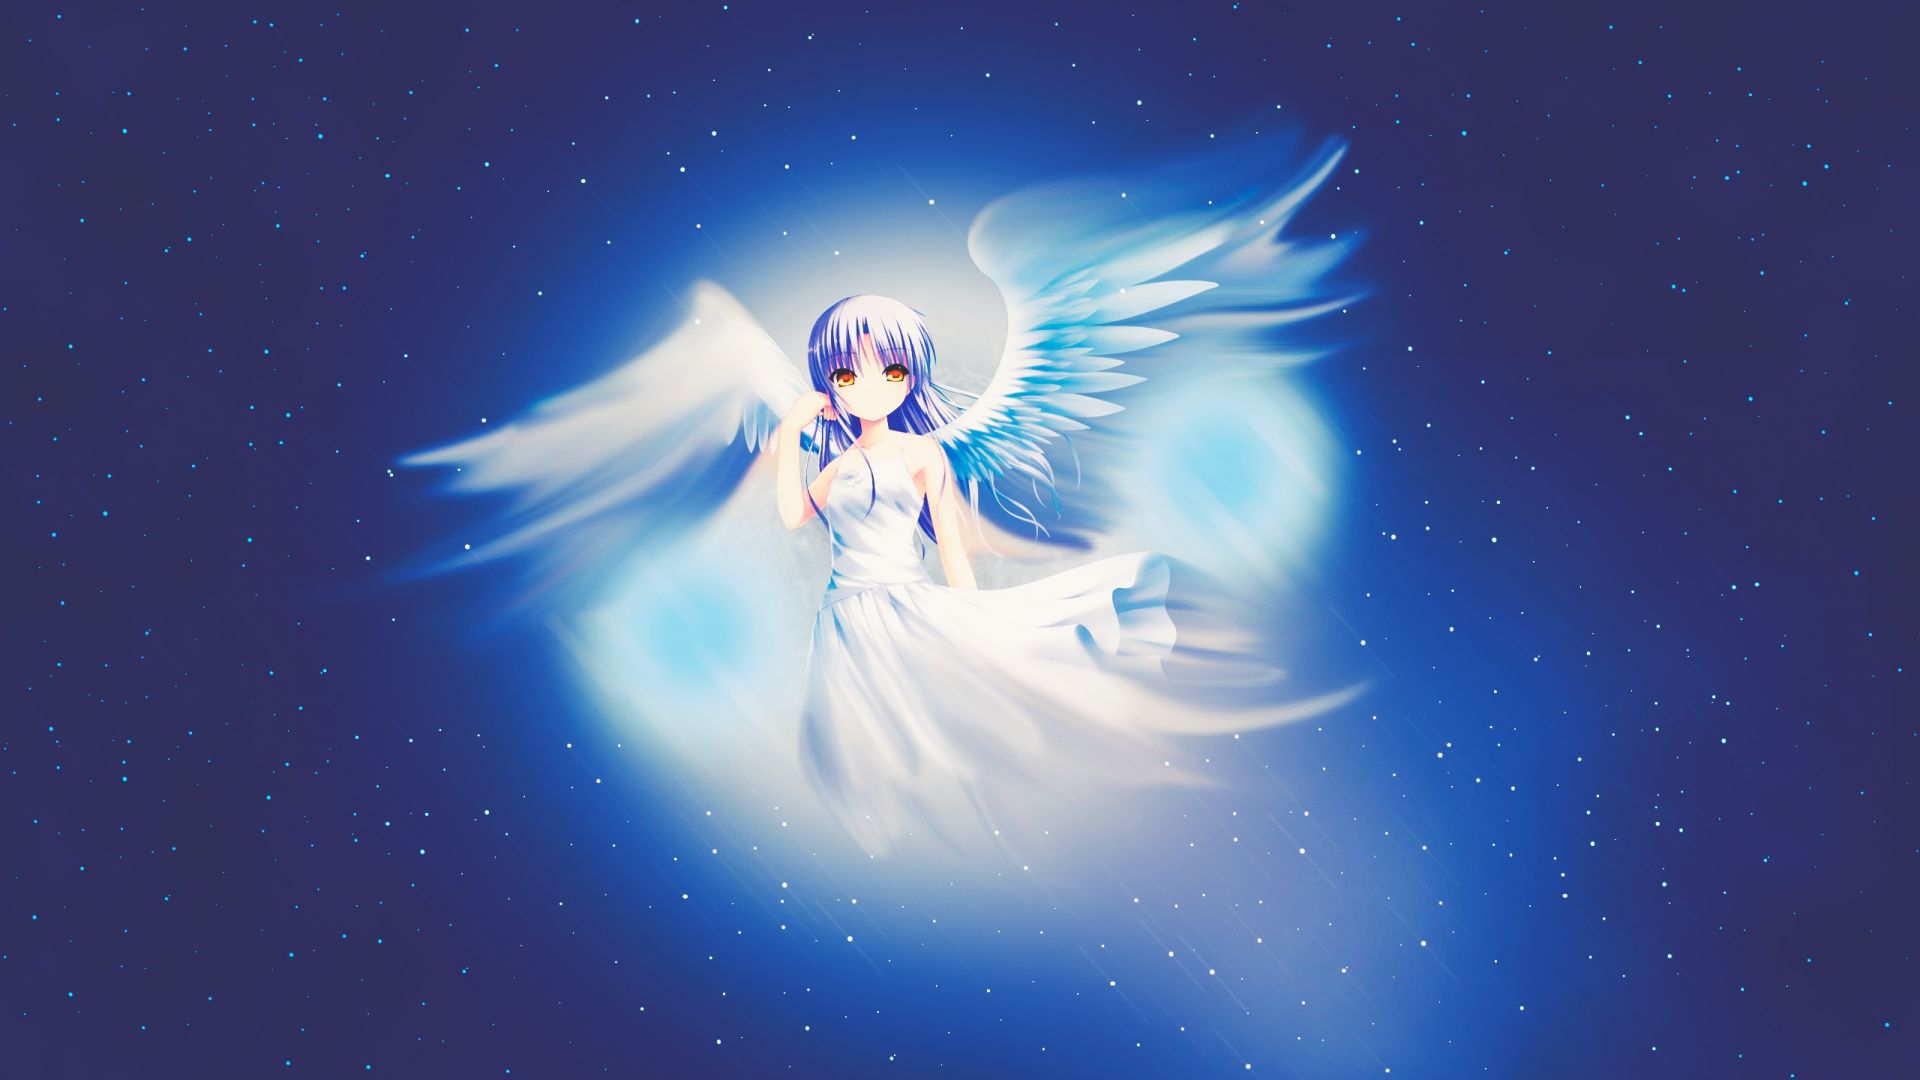 Desktop wallpaper kanade tachibana angel beats angle anime girl hd image picture background gqytc